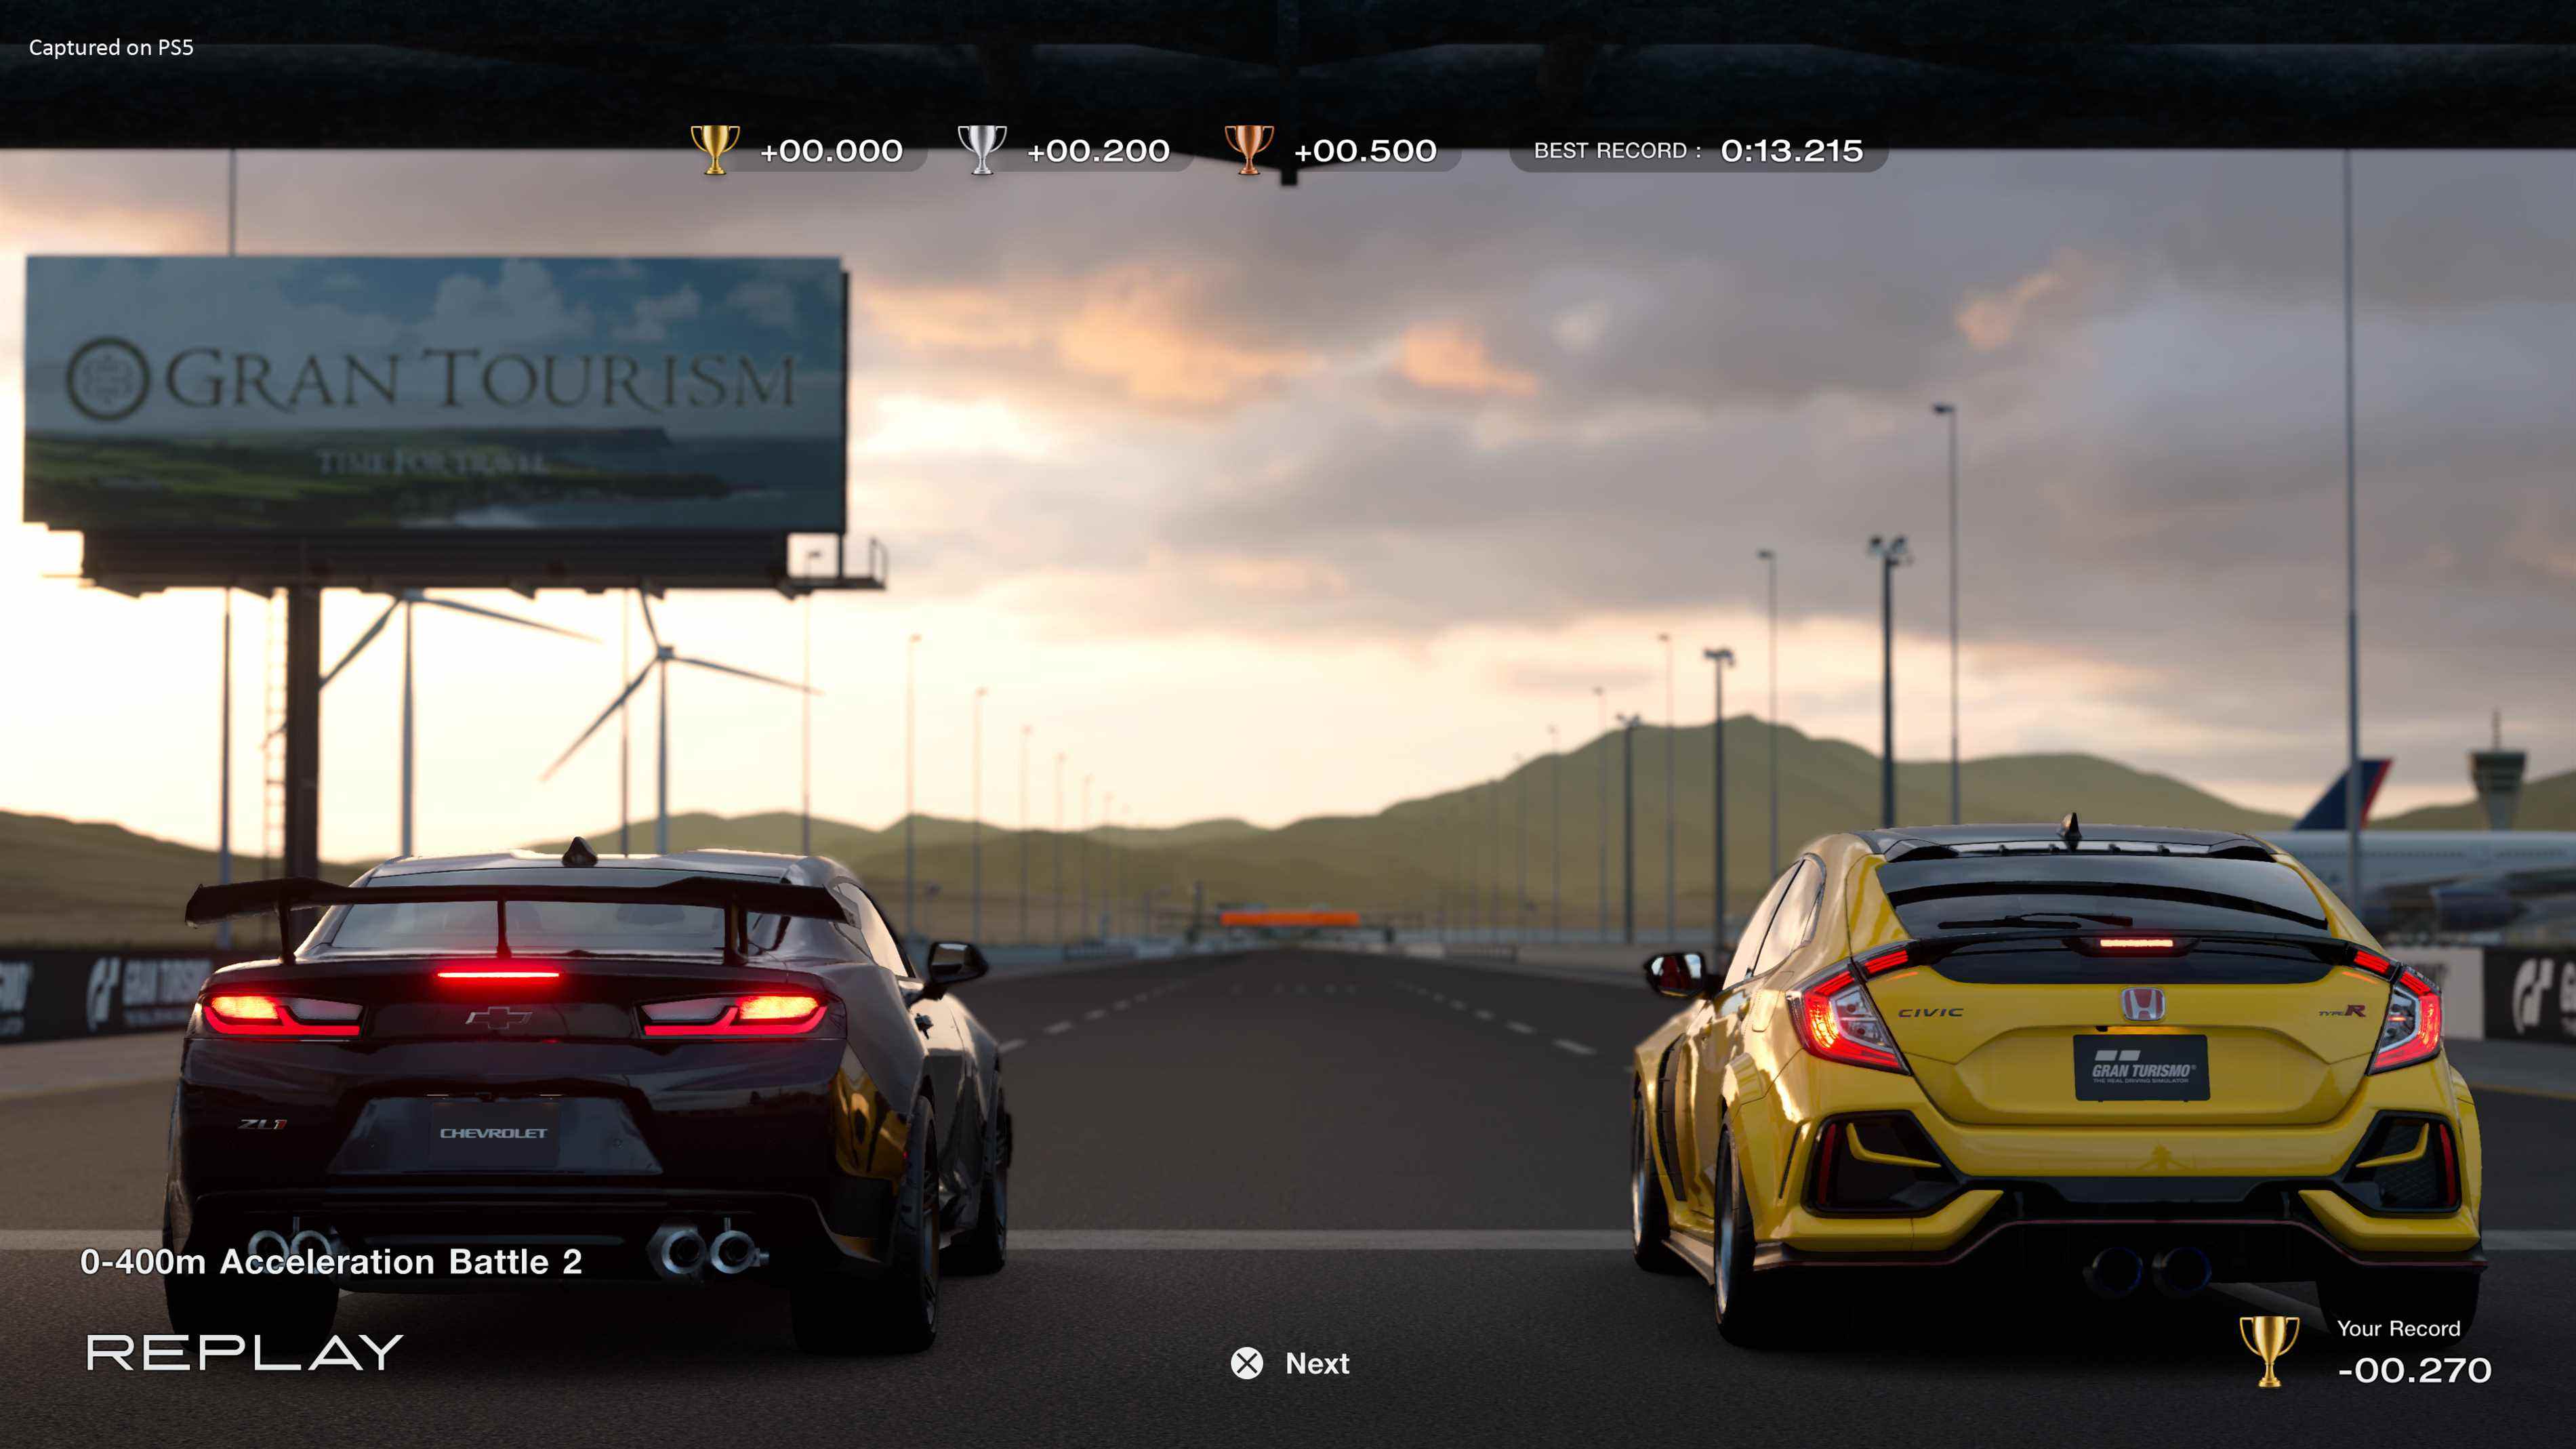 Capture d'écran de la relecture de l'hippodrome de Gran Turismo 7